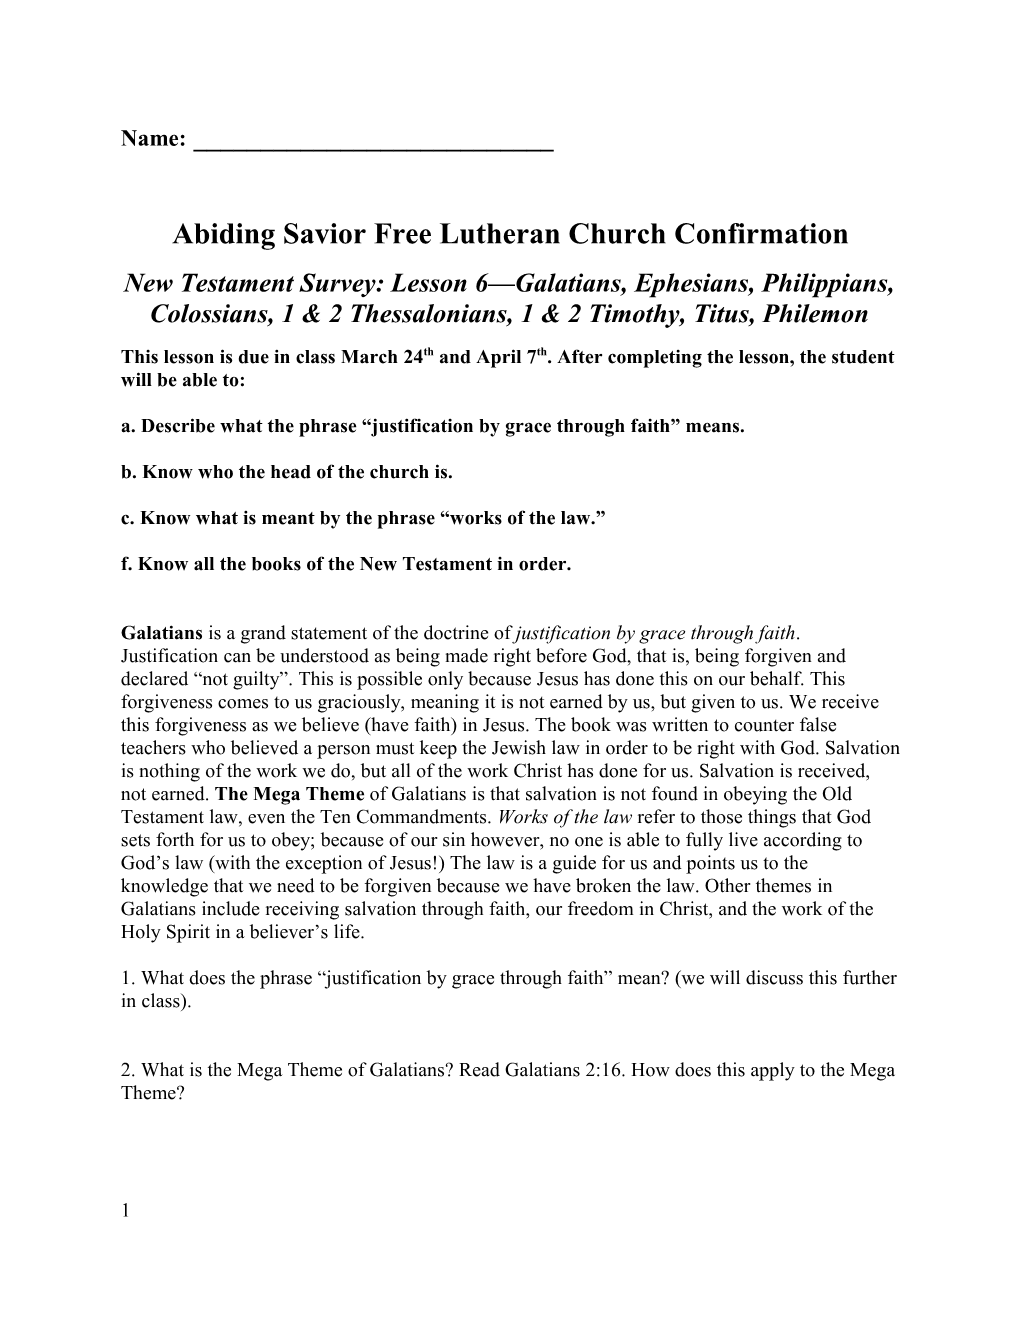 Abiding Savior Free Lutheran Church Confirmation